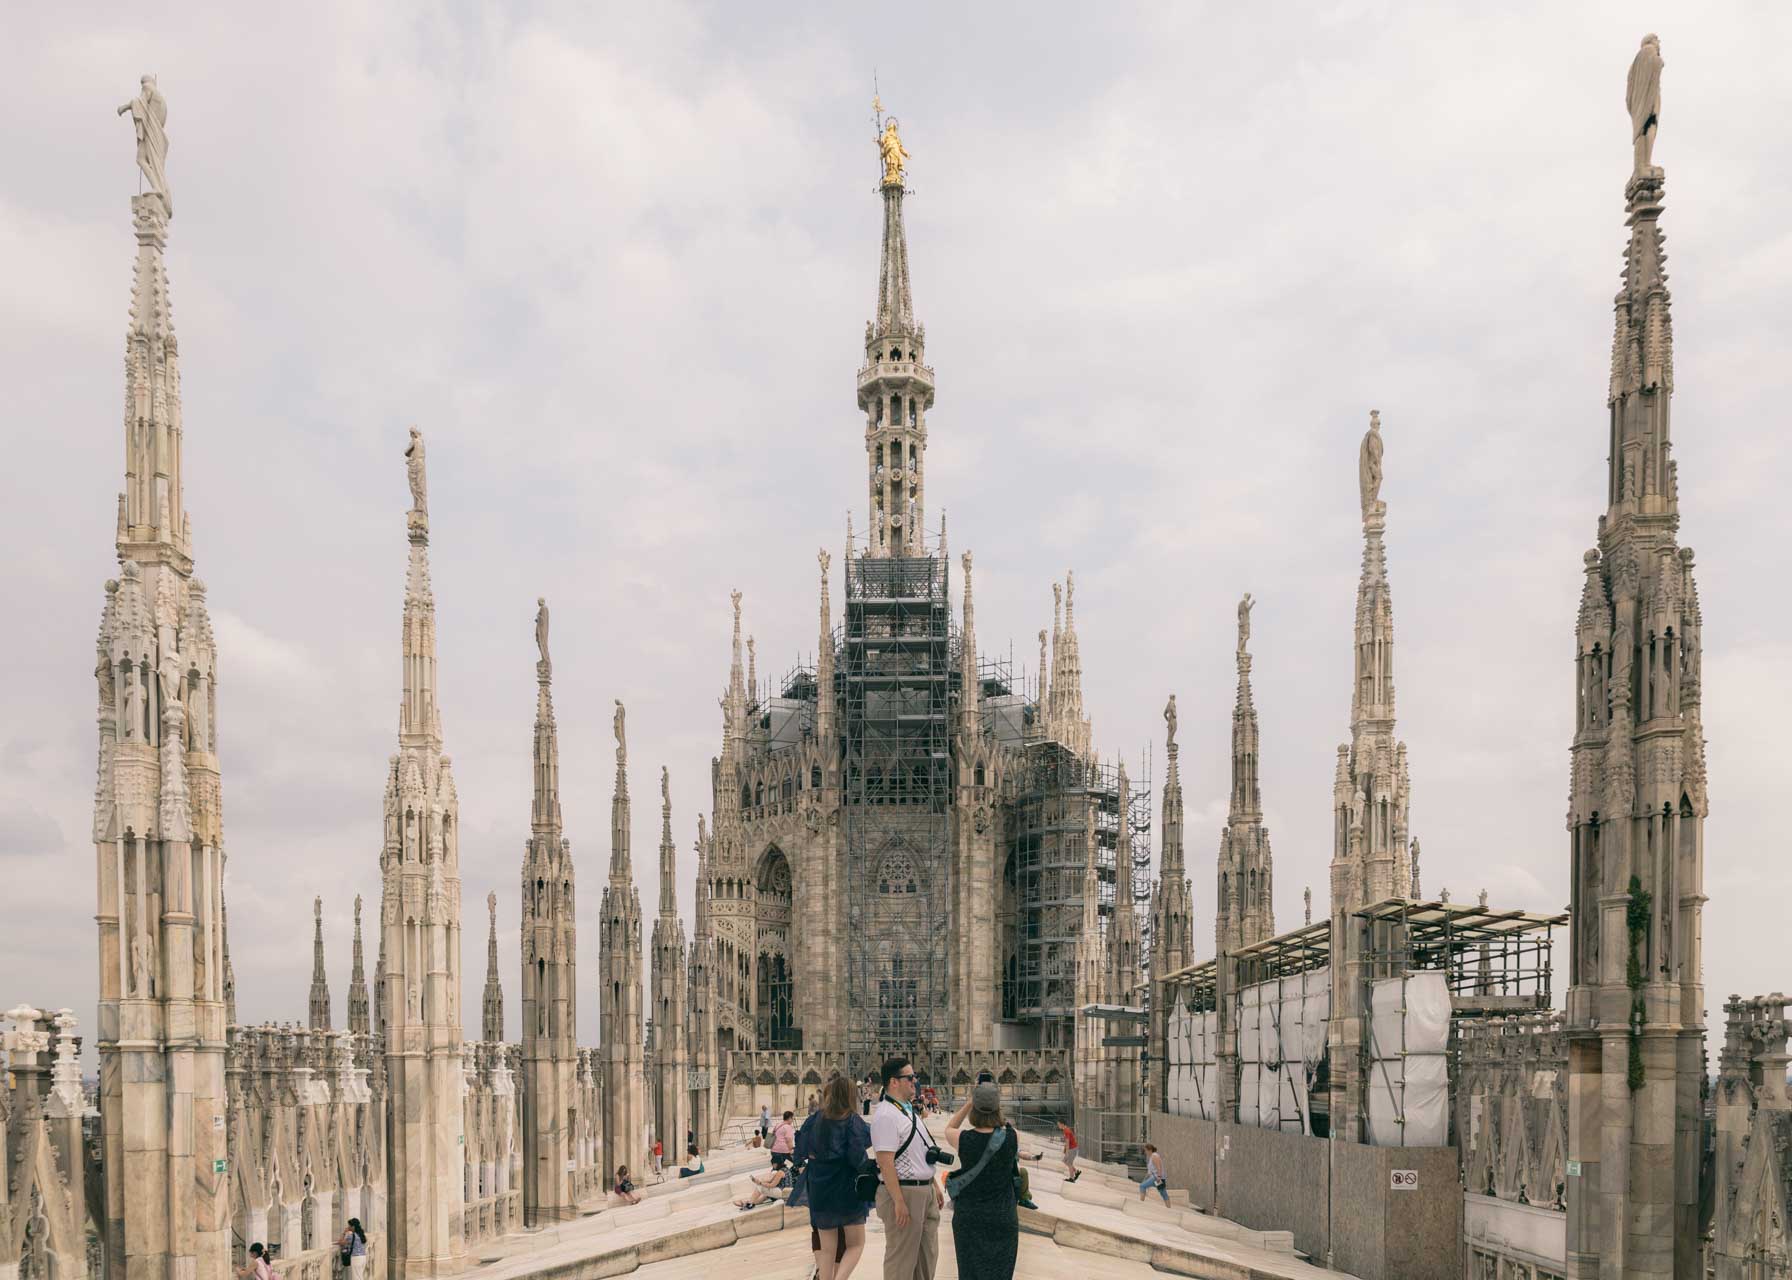 Duomo di Milano rooftop